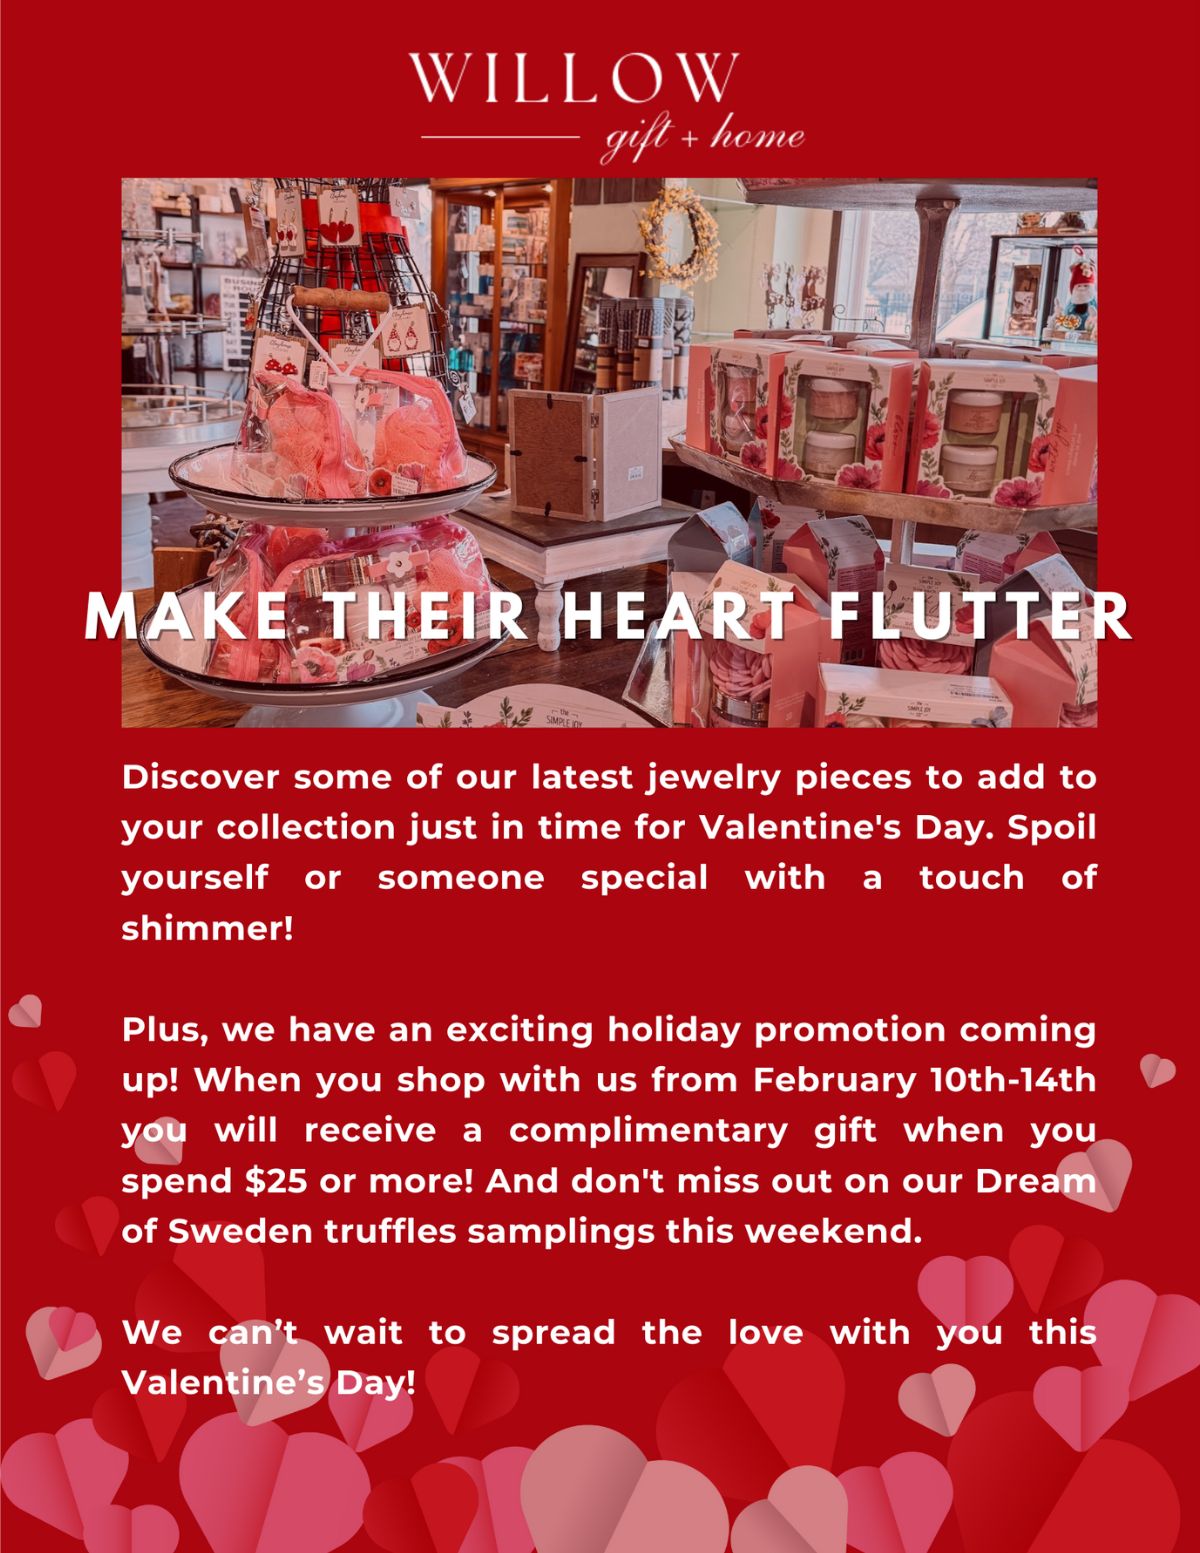 Make their heart flutter this Valentine's Day